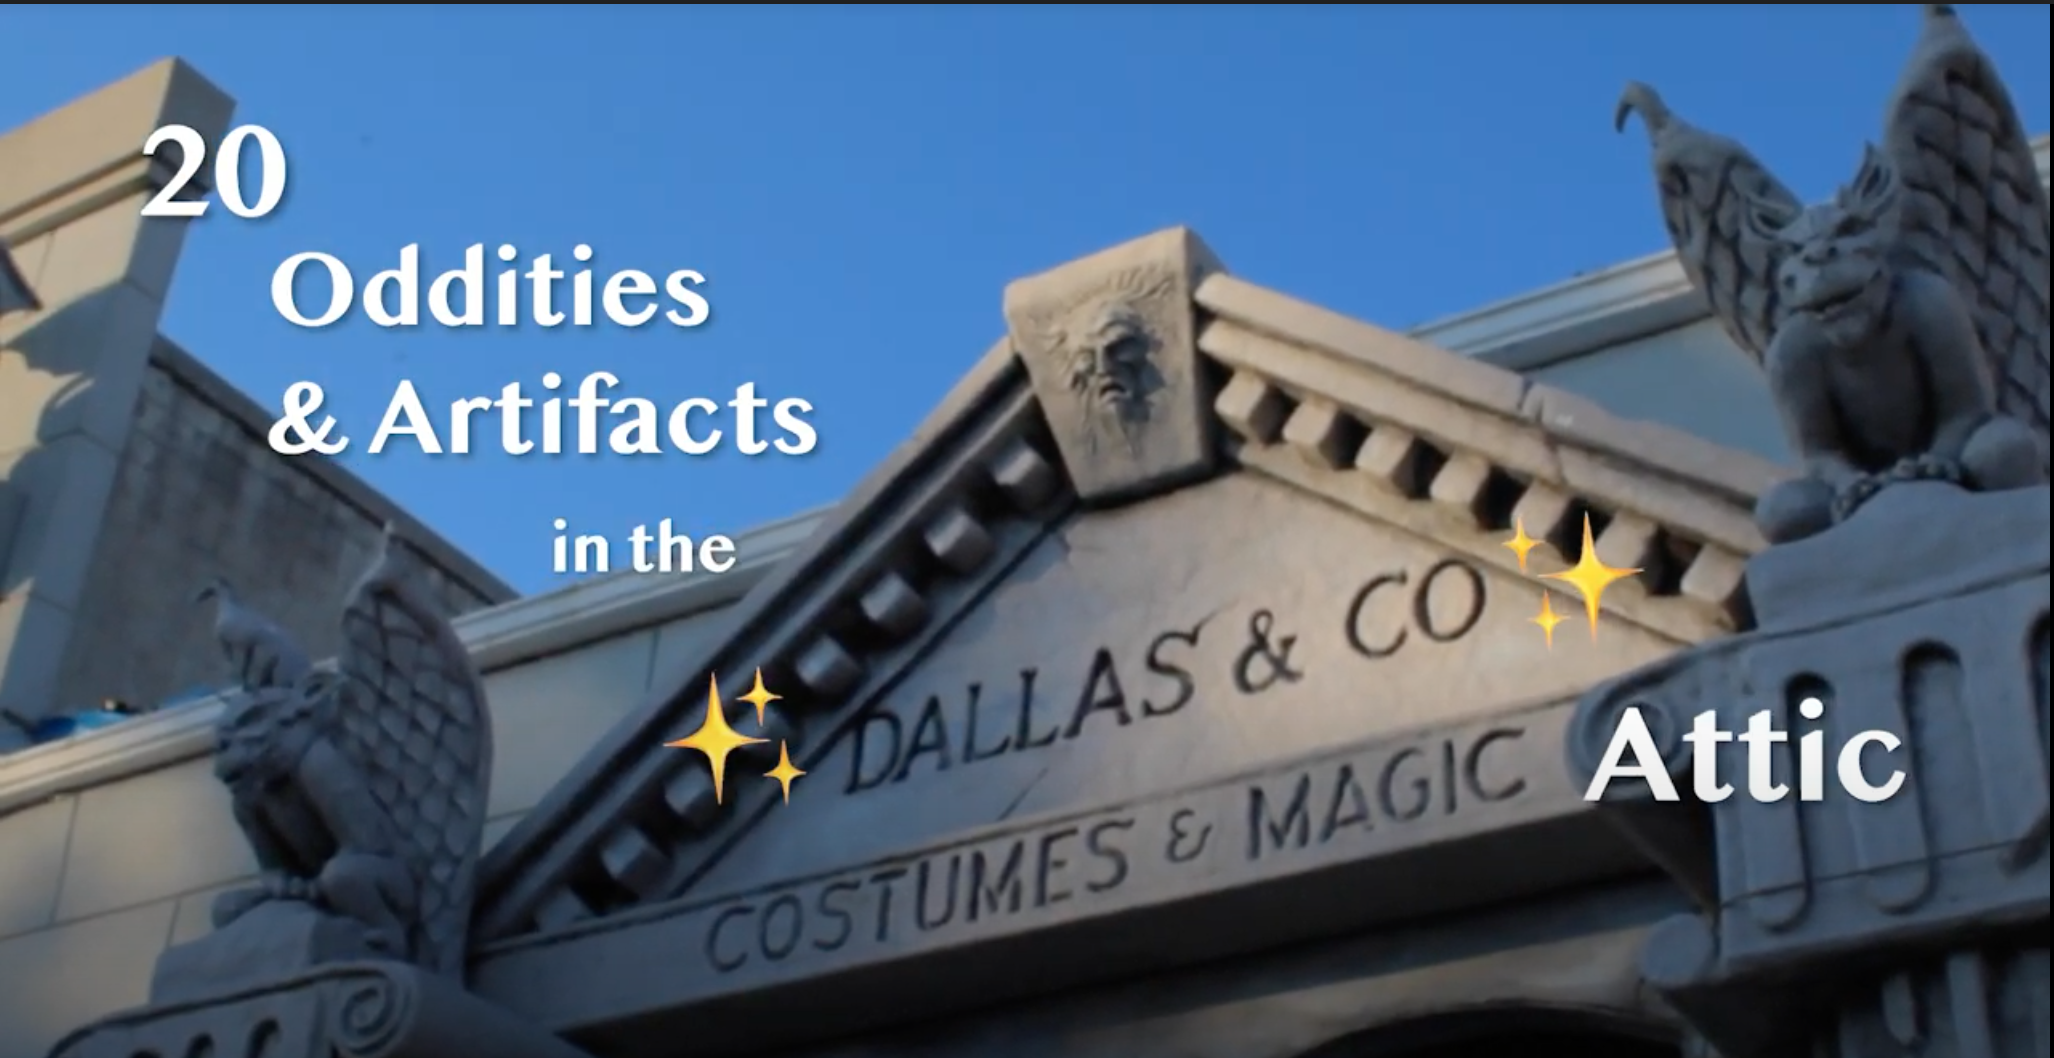 A last look at the secret oddities hidden at Dallas & Co.